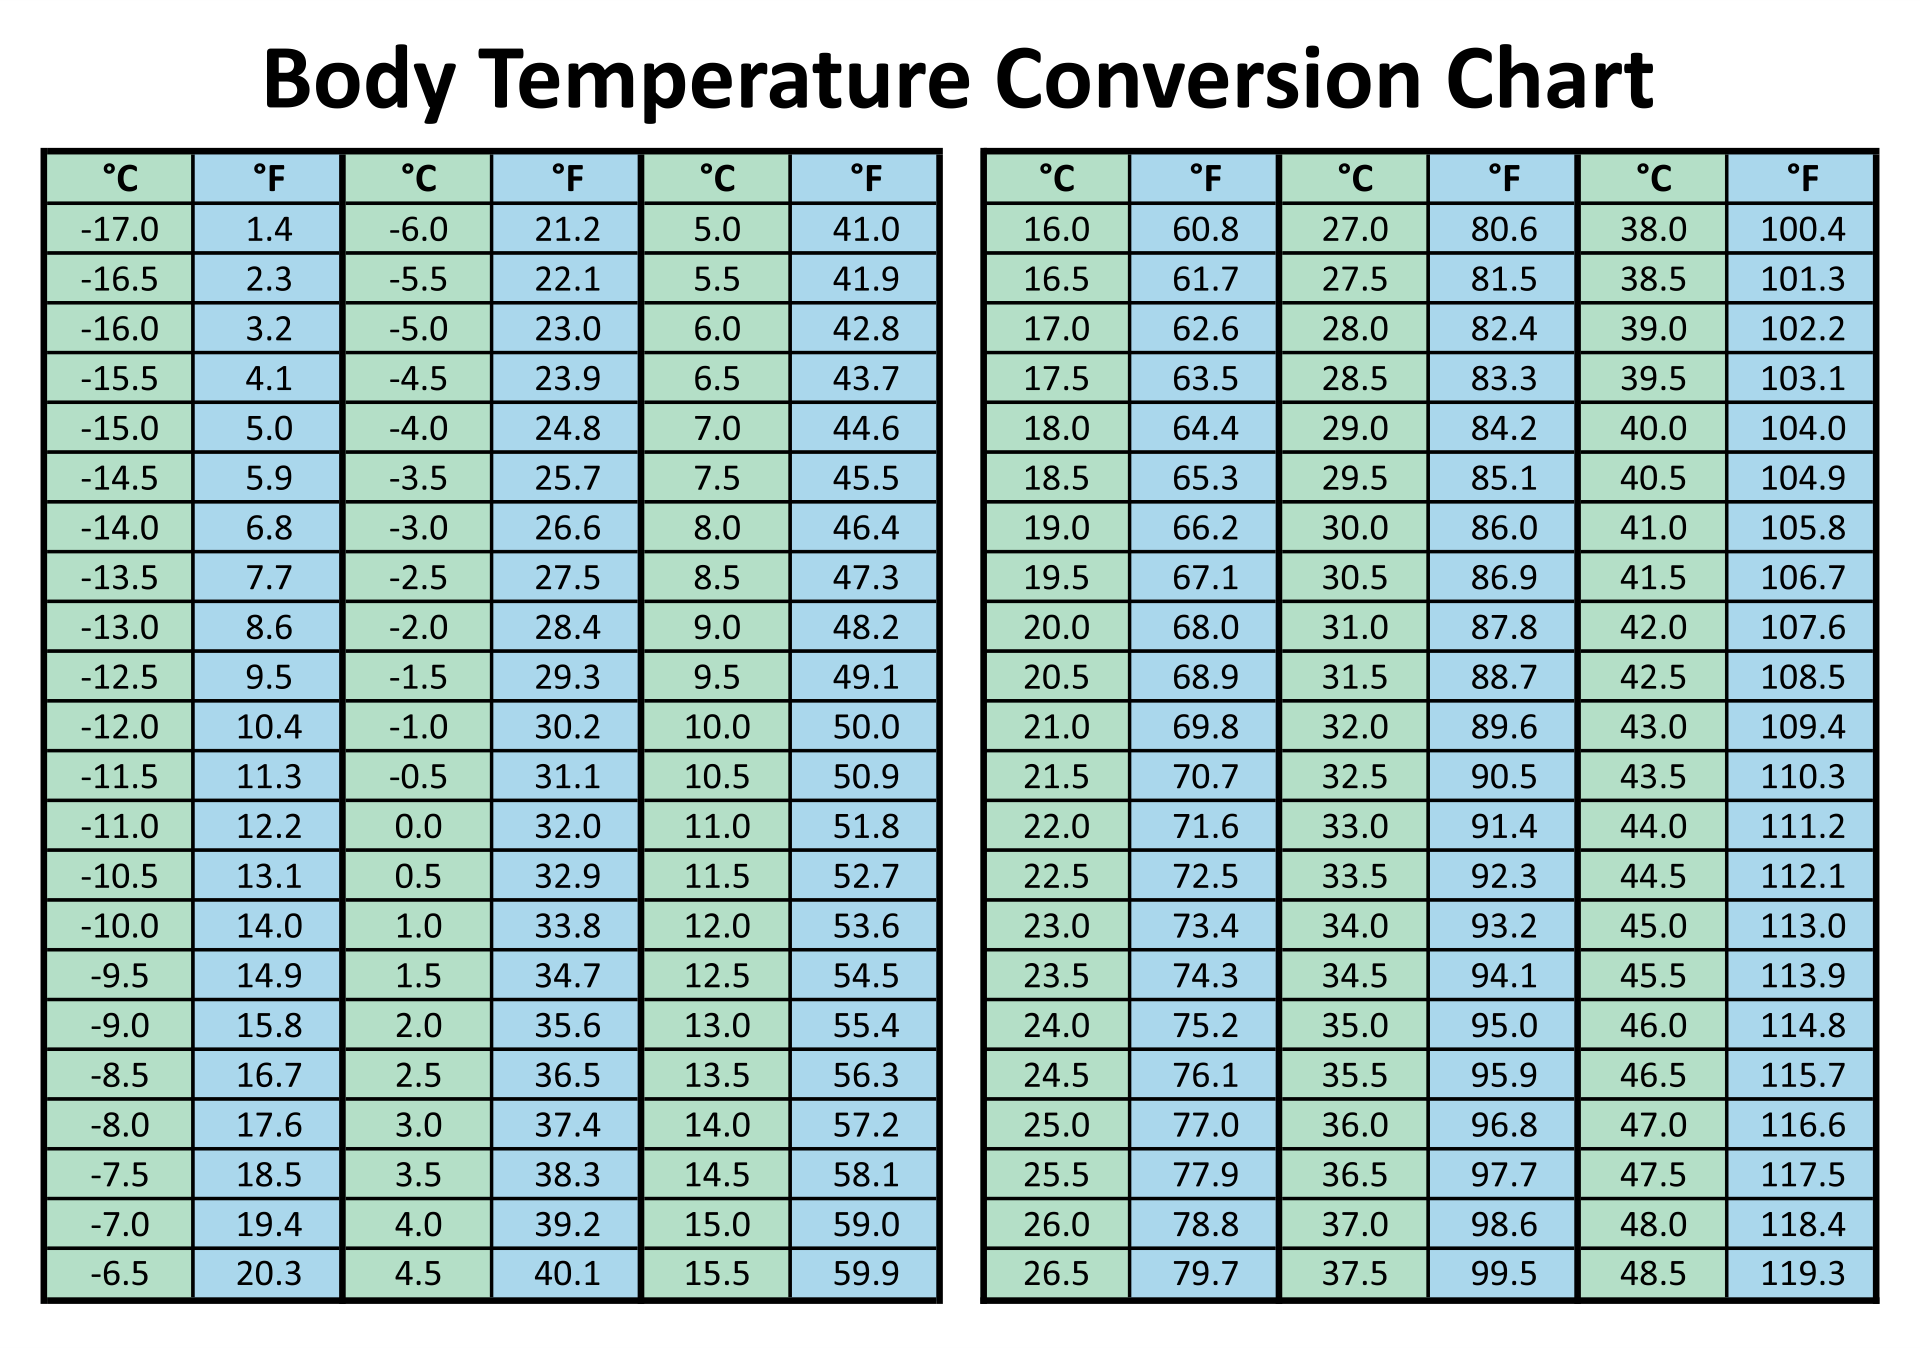 celsius-to-fahrenheit-conversion-chart-for-body-rature-tutorial-pics